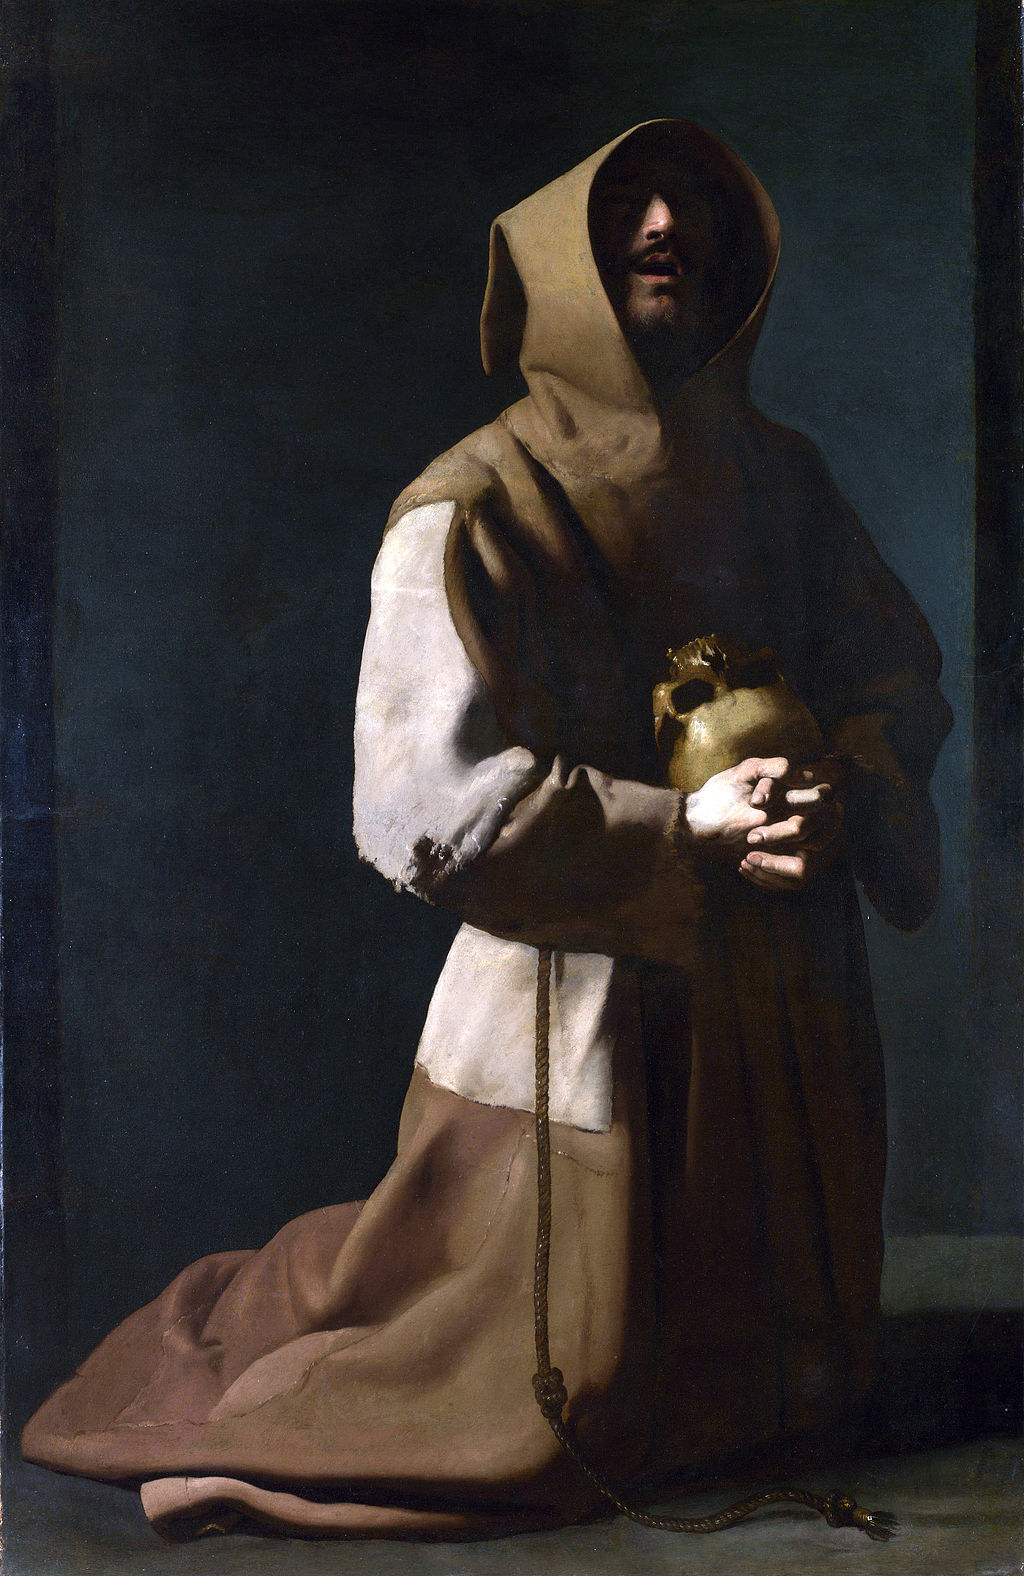 St. Francis in prayer